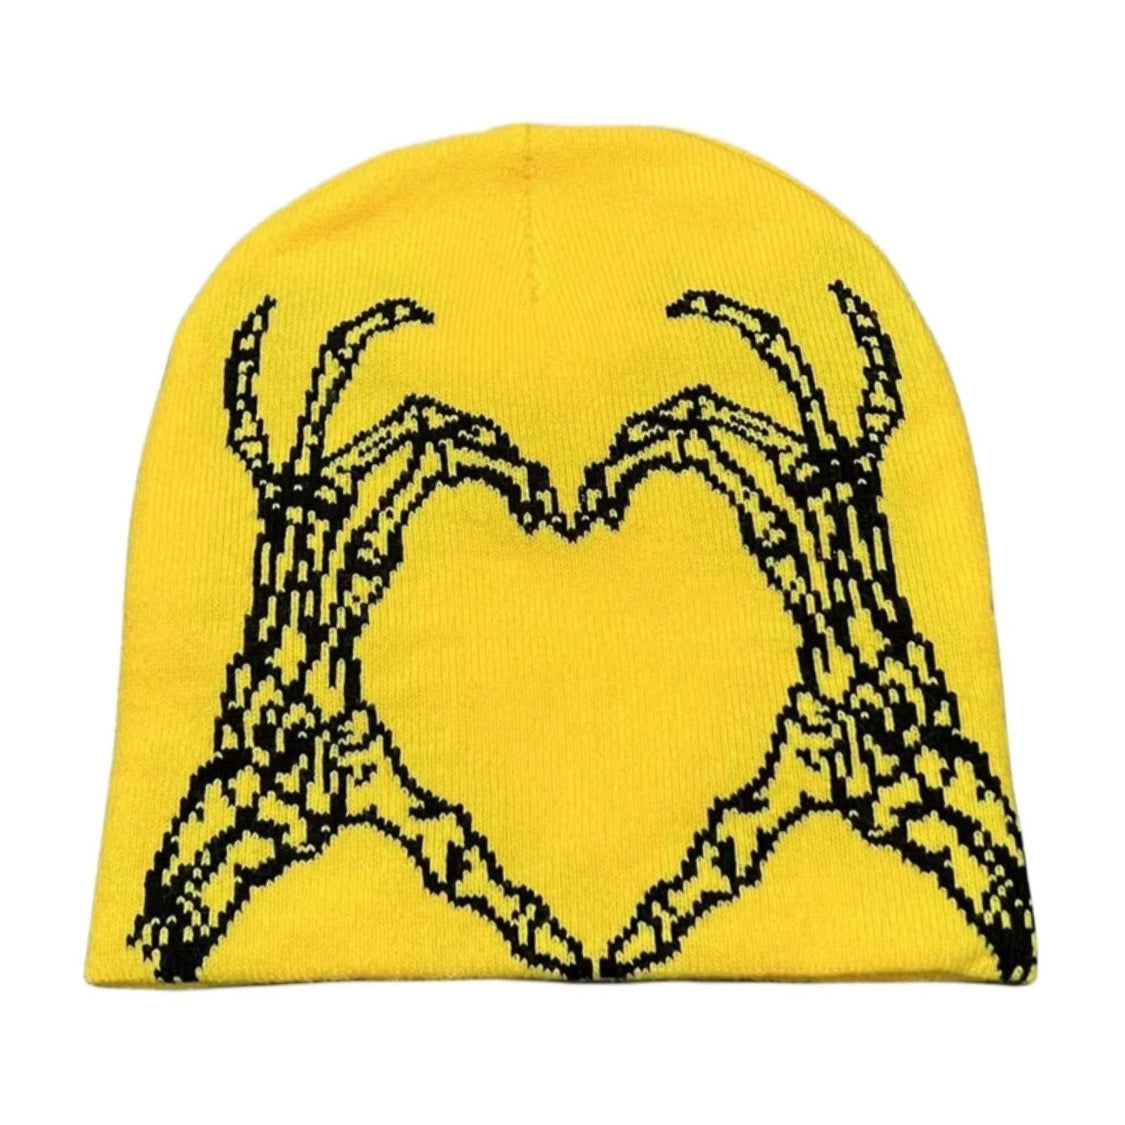 yellow skeleton heart hat